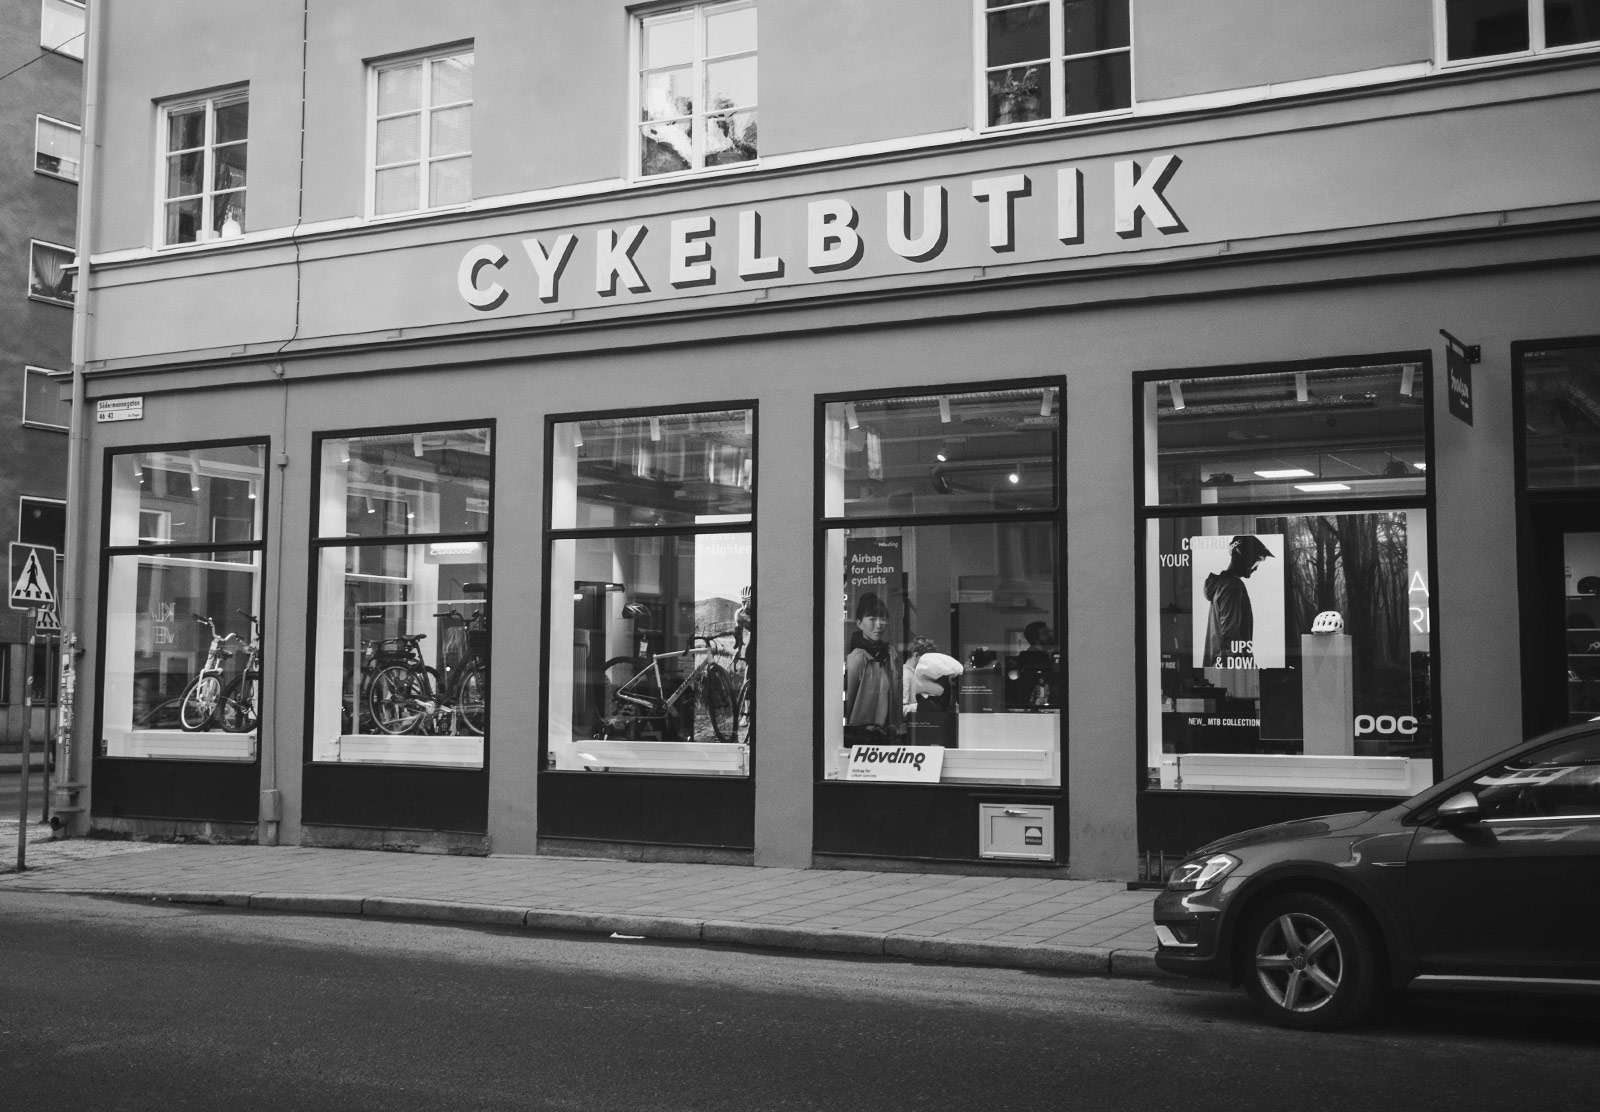 Cykelbutik sign